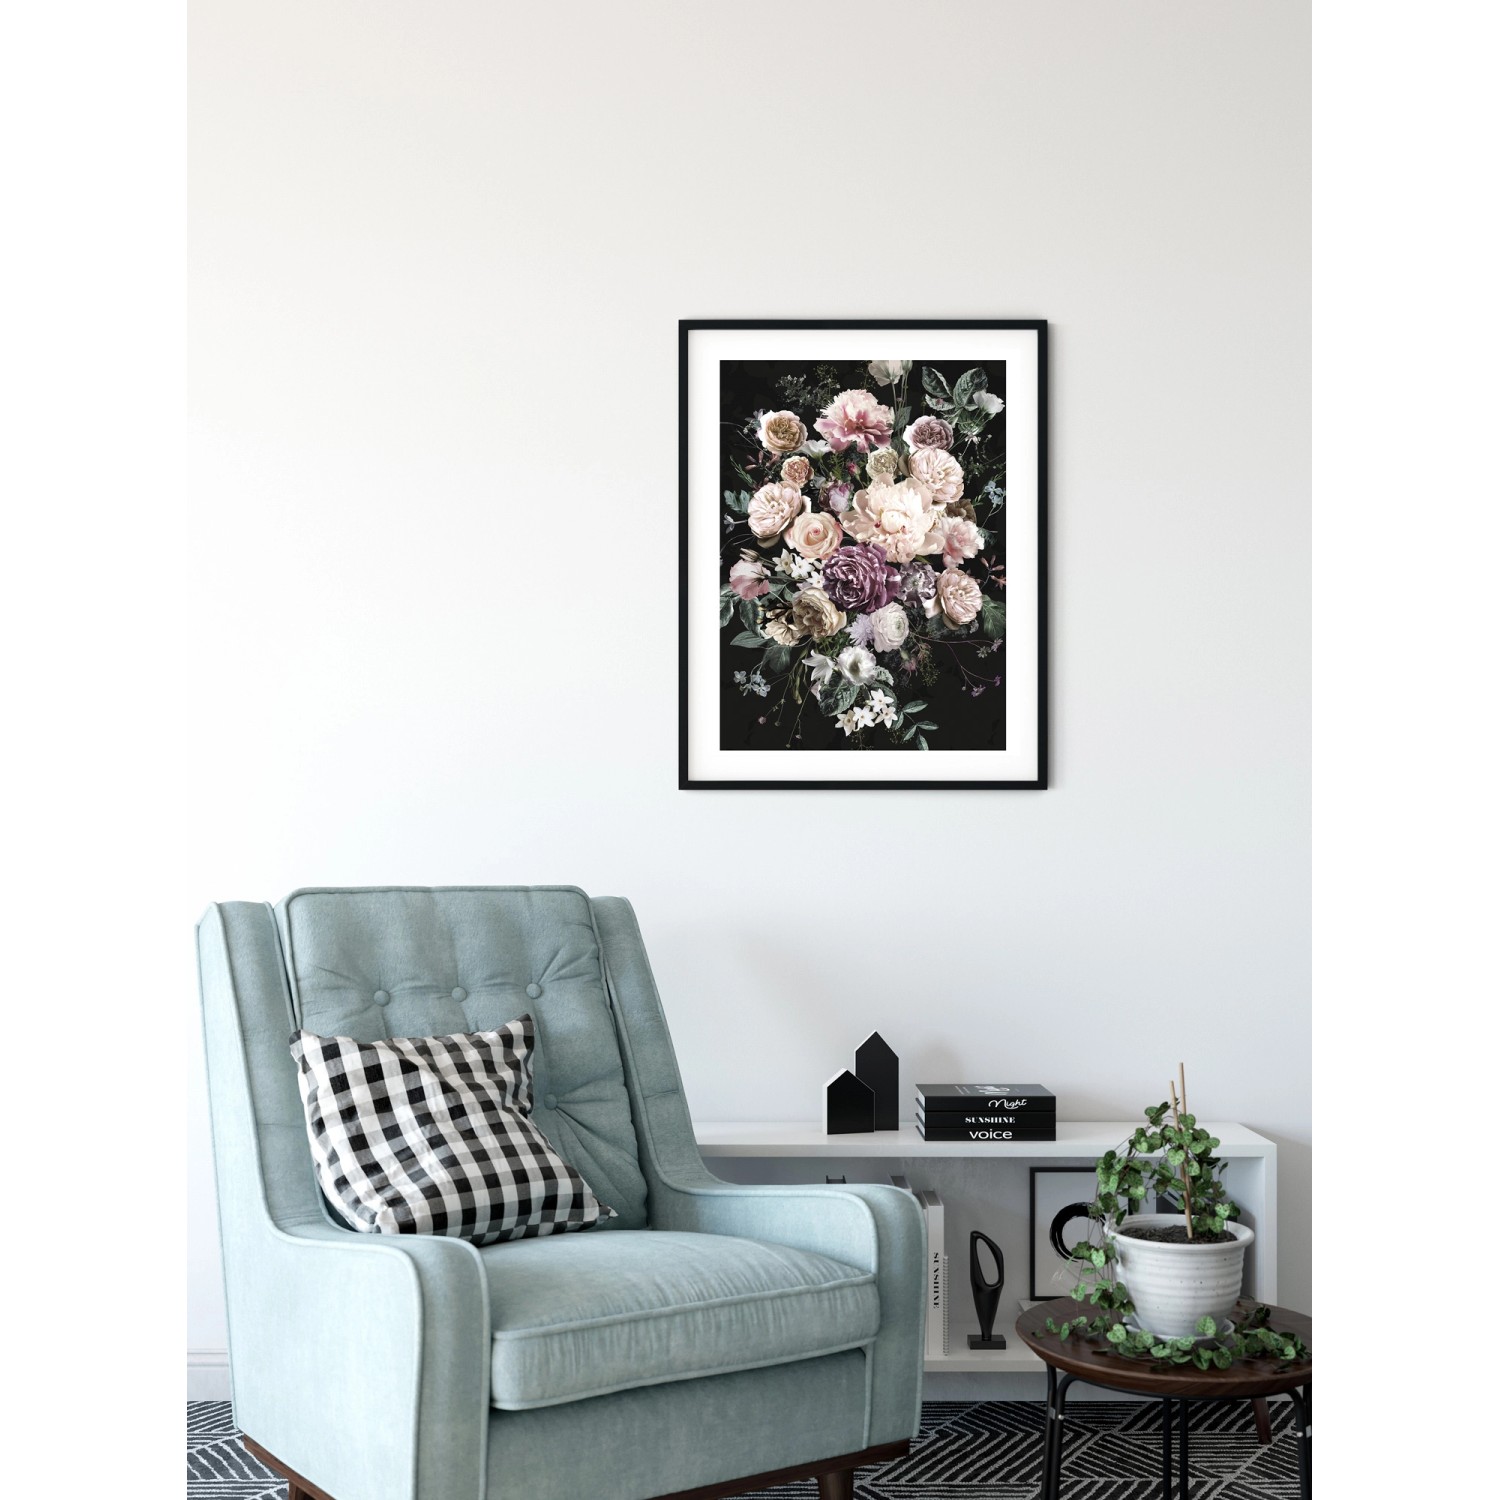 Komar Wandbild Charming Bouquet 50 cm x 70 cm kaufen bei OBI